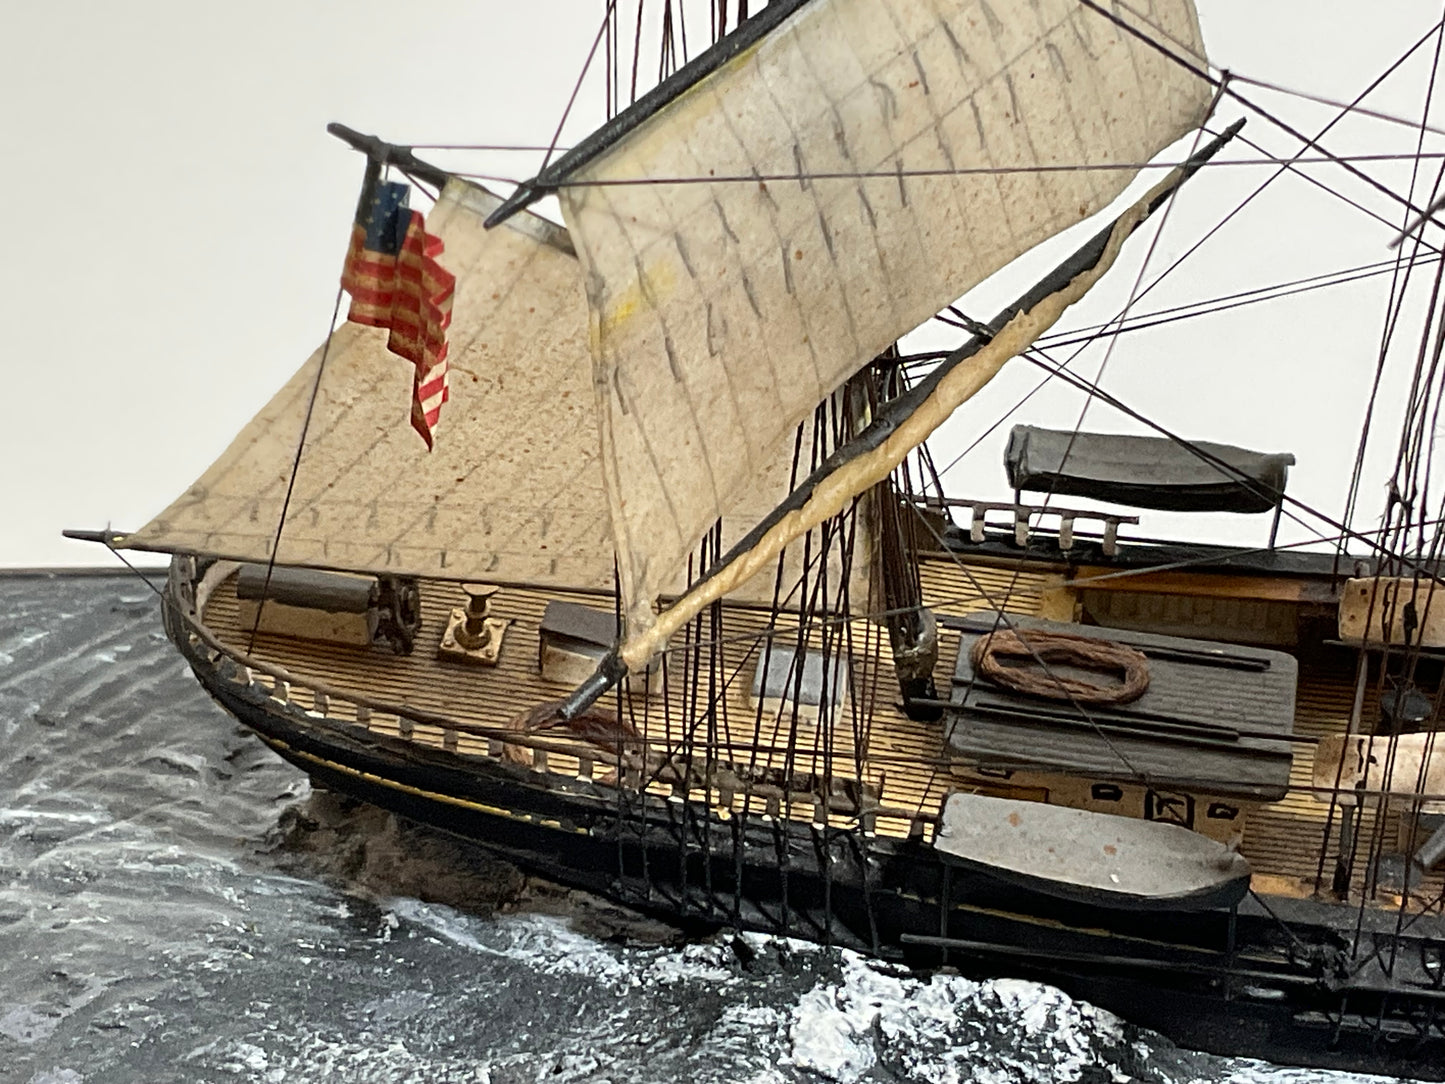 Tea Clipper "Surprise" of Boston Entering an Asian Port